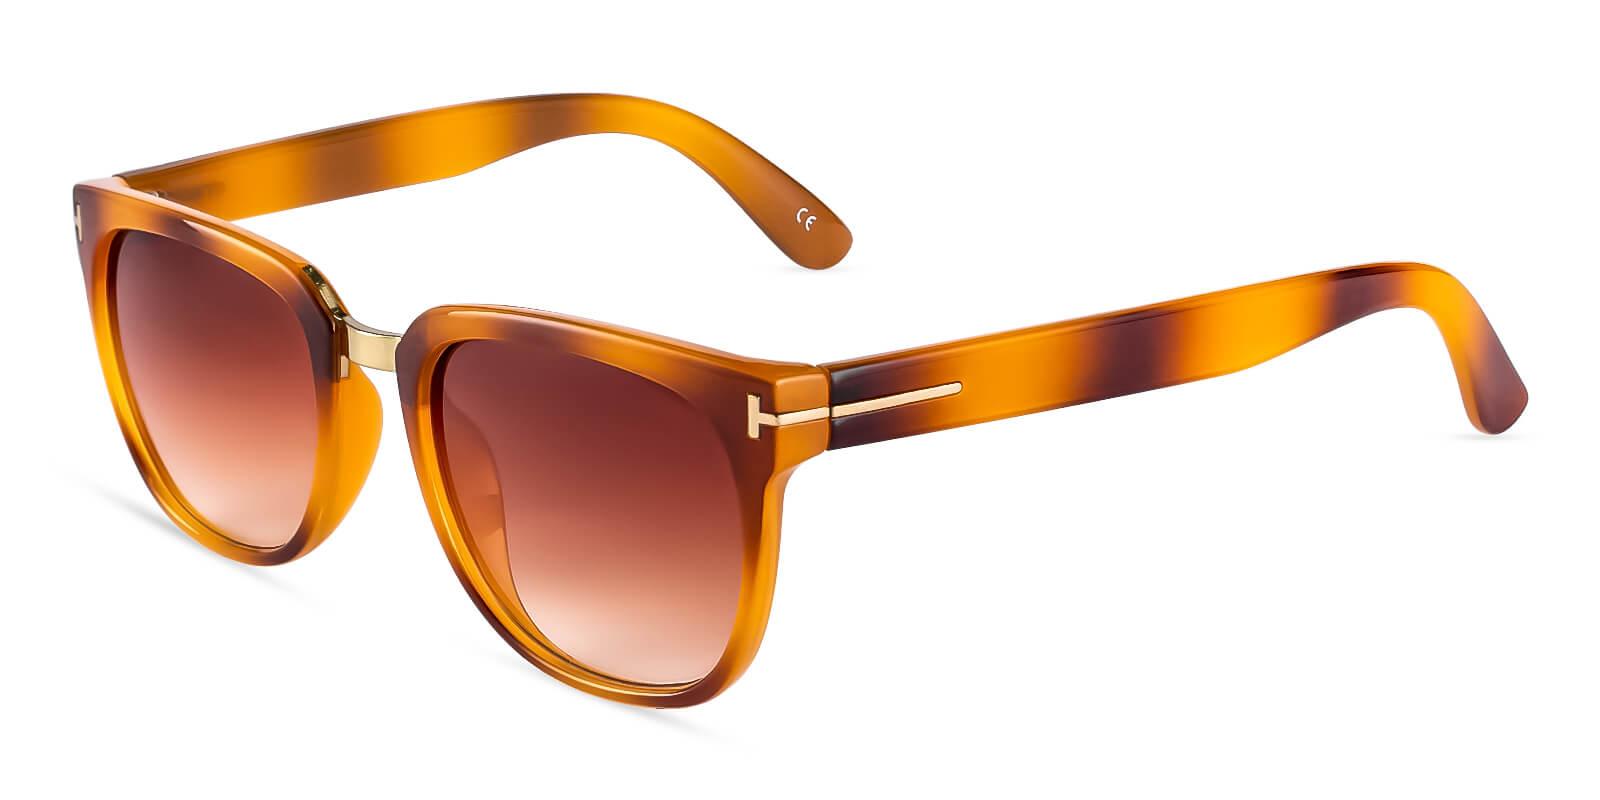 Mars Pattern Acetate Sunglasses , UniversalBridgeFit Frames from ABBE Glasses